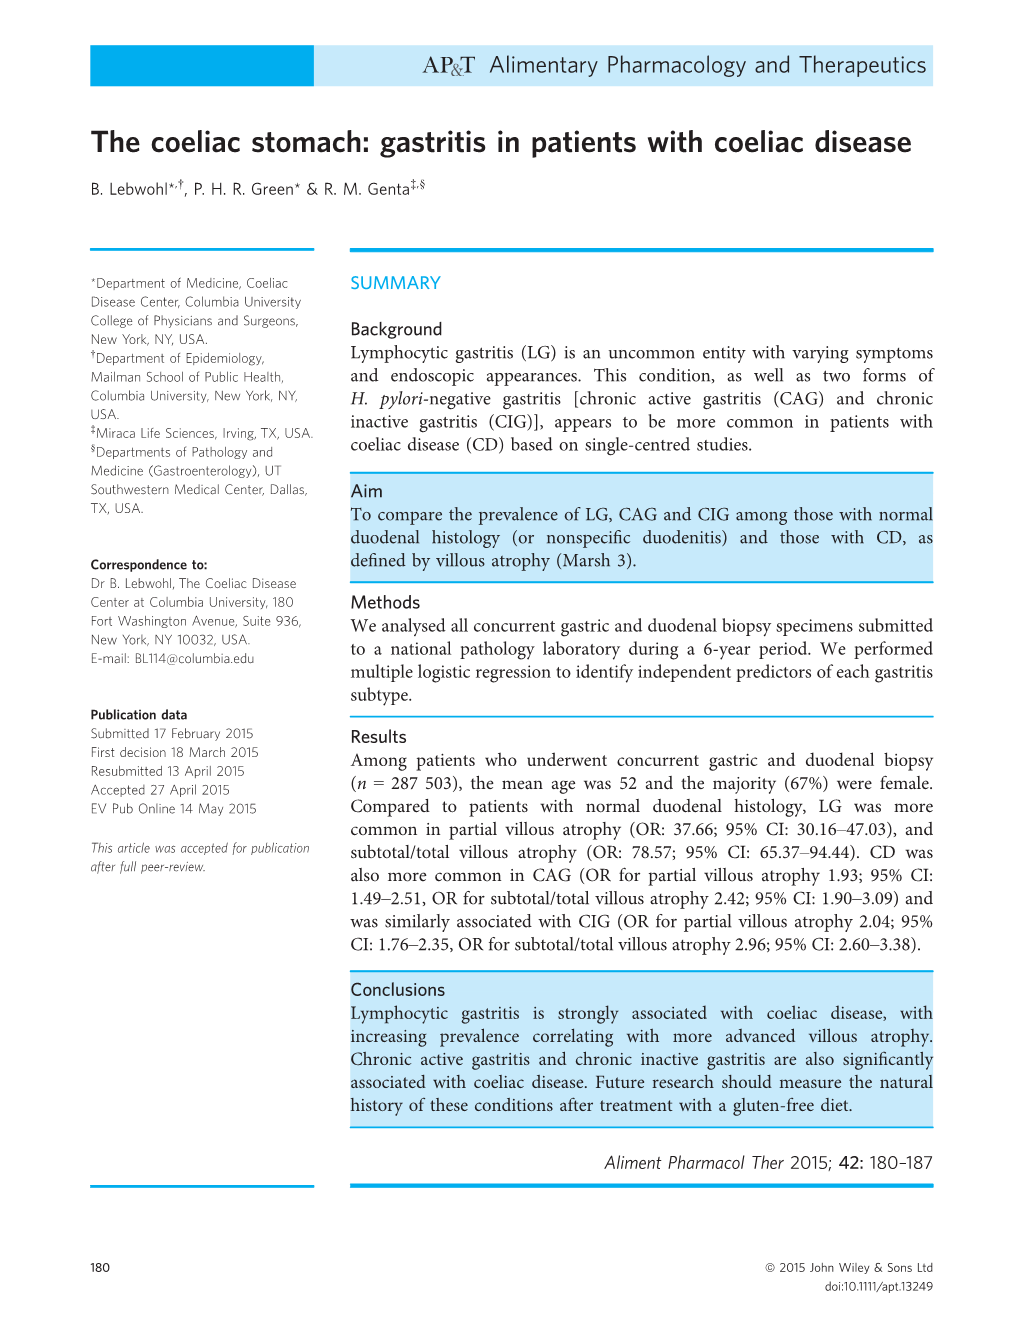 Gastritis in Patients with Coeliac Disease